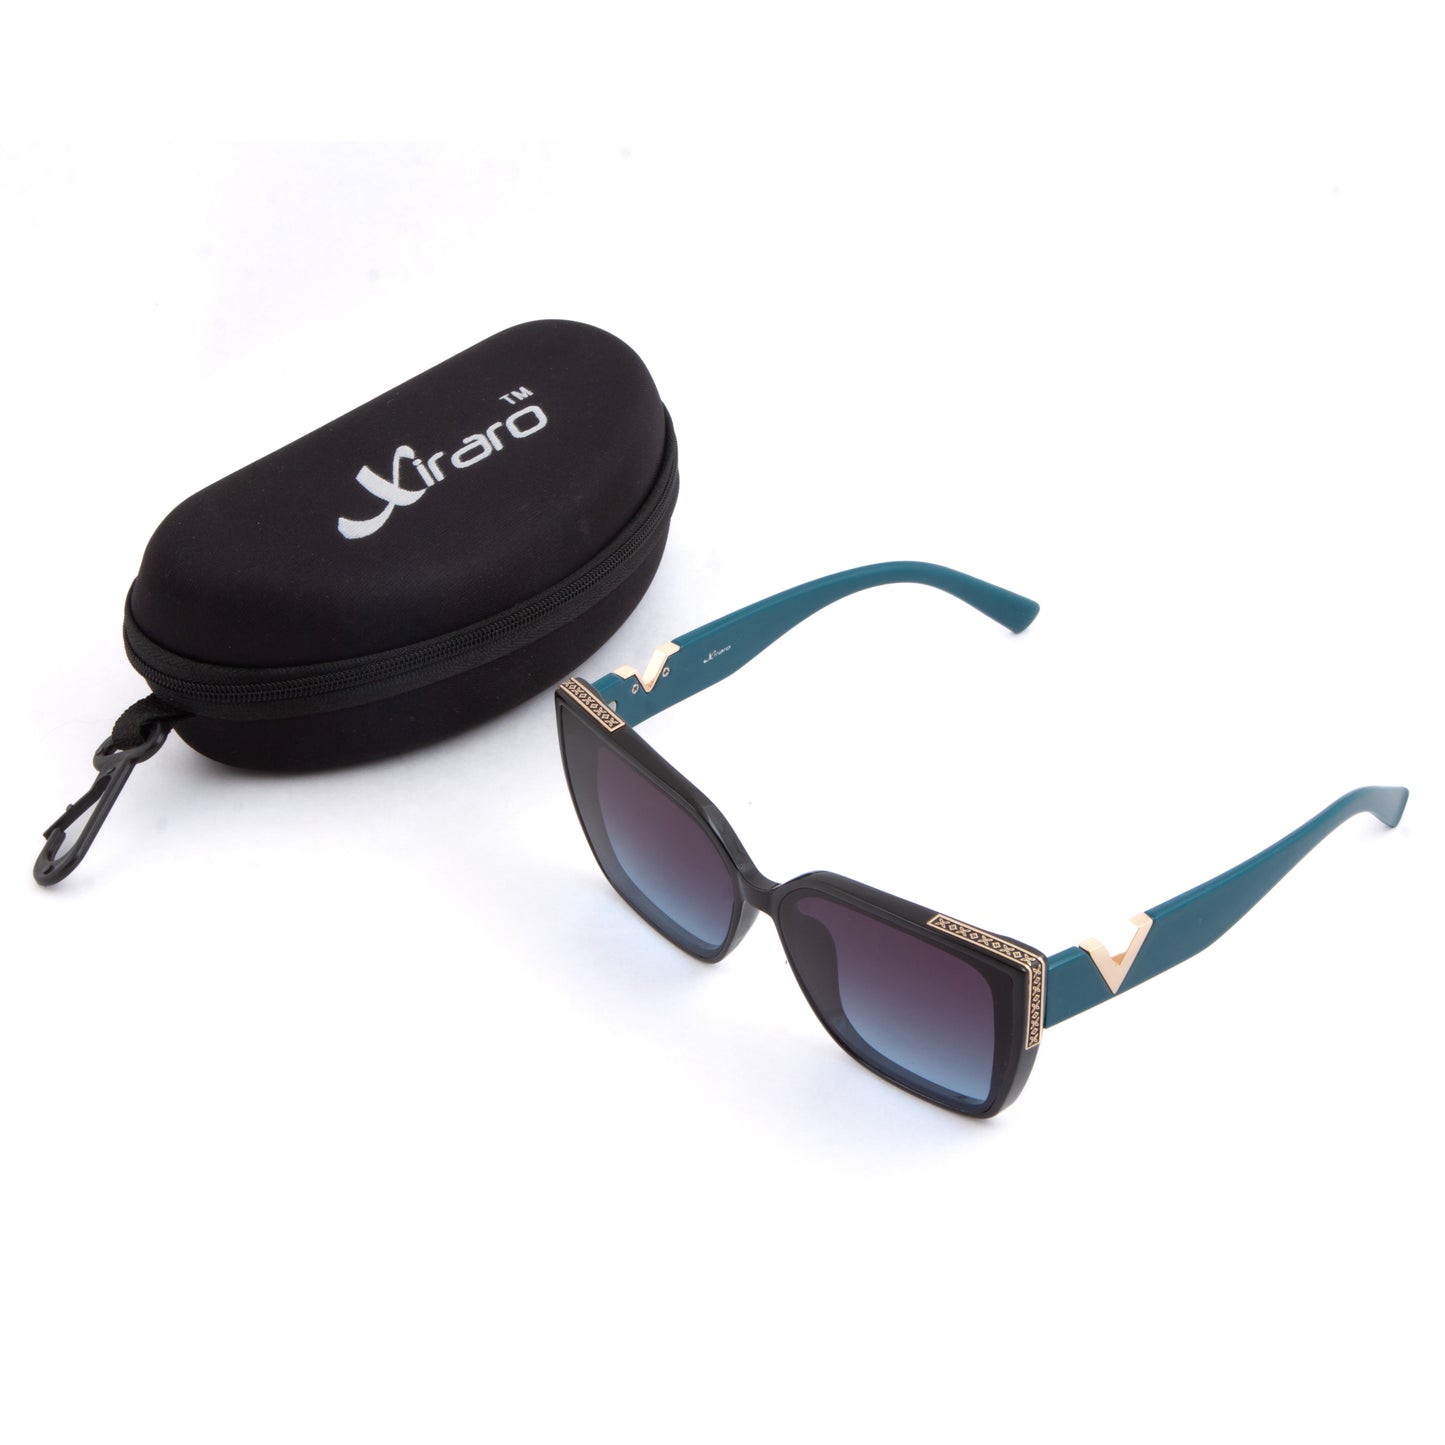 Xiraro Cateye Sunglasses for Women (TB102)